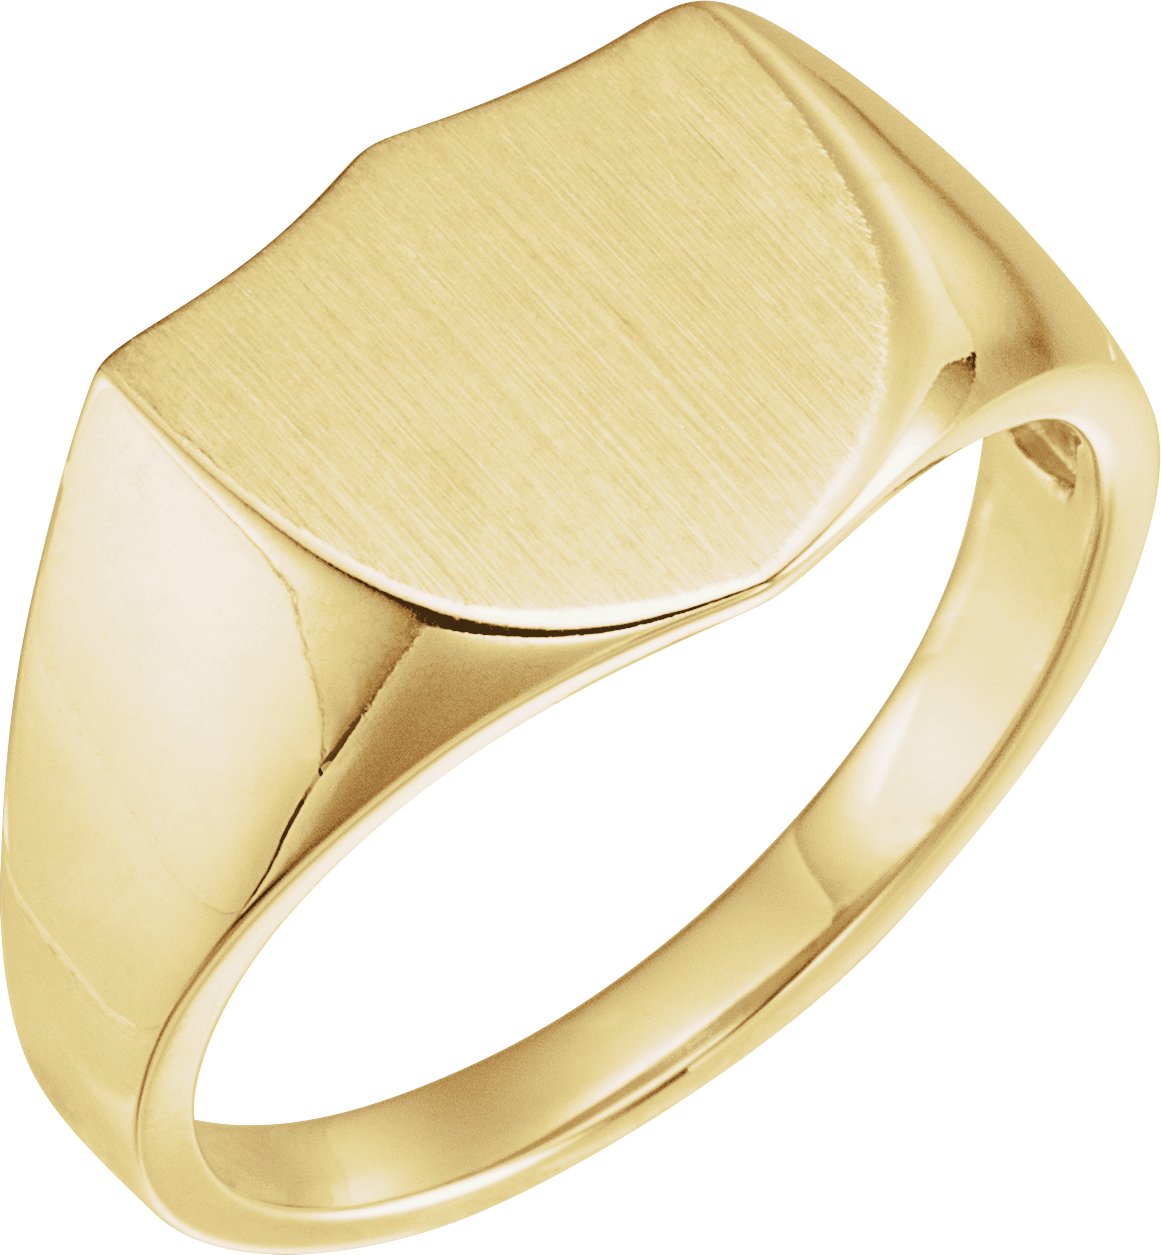 14K Yellow 14 mm Shield Signet Ring